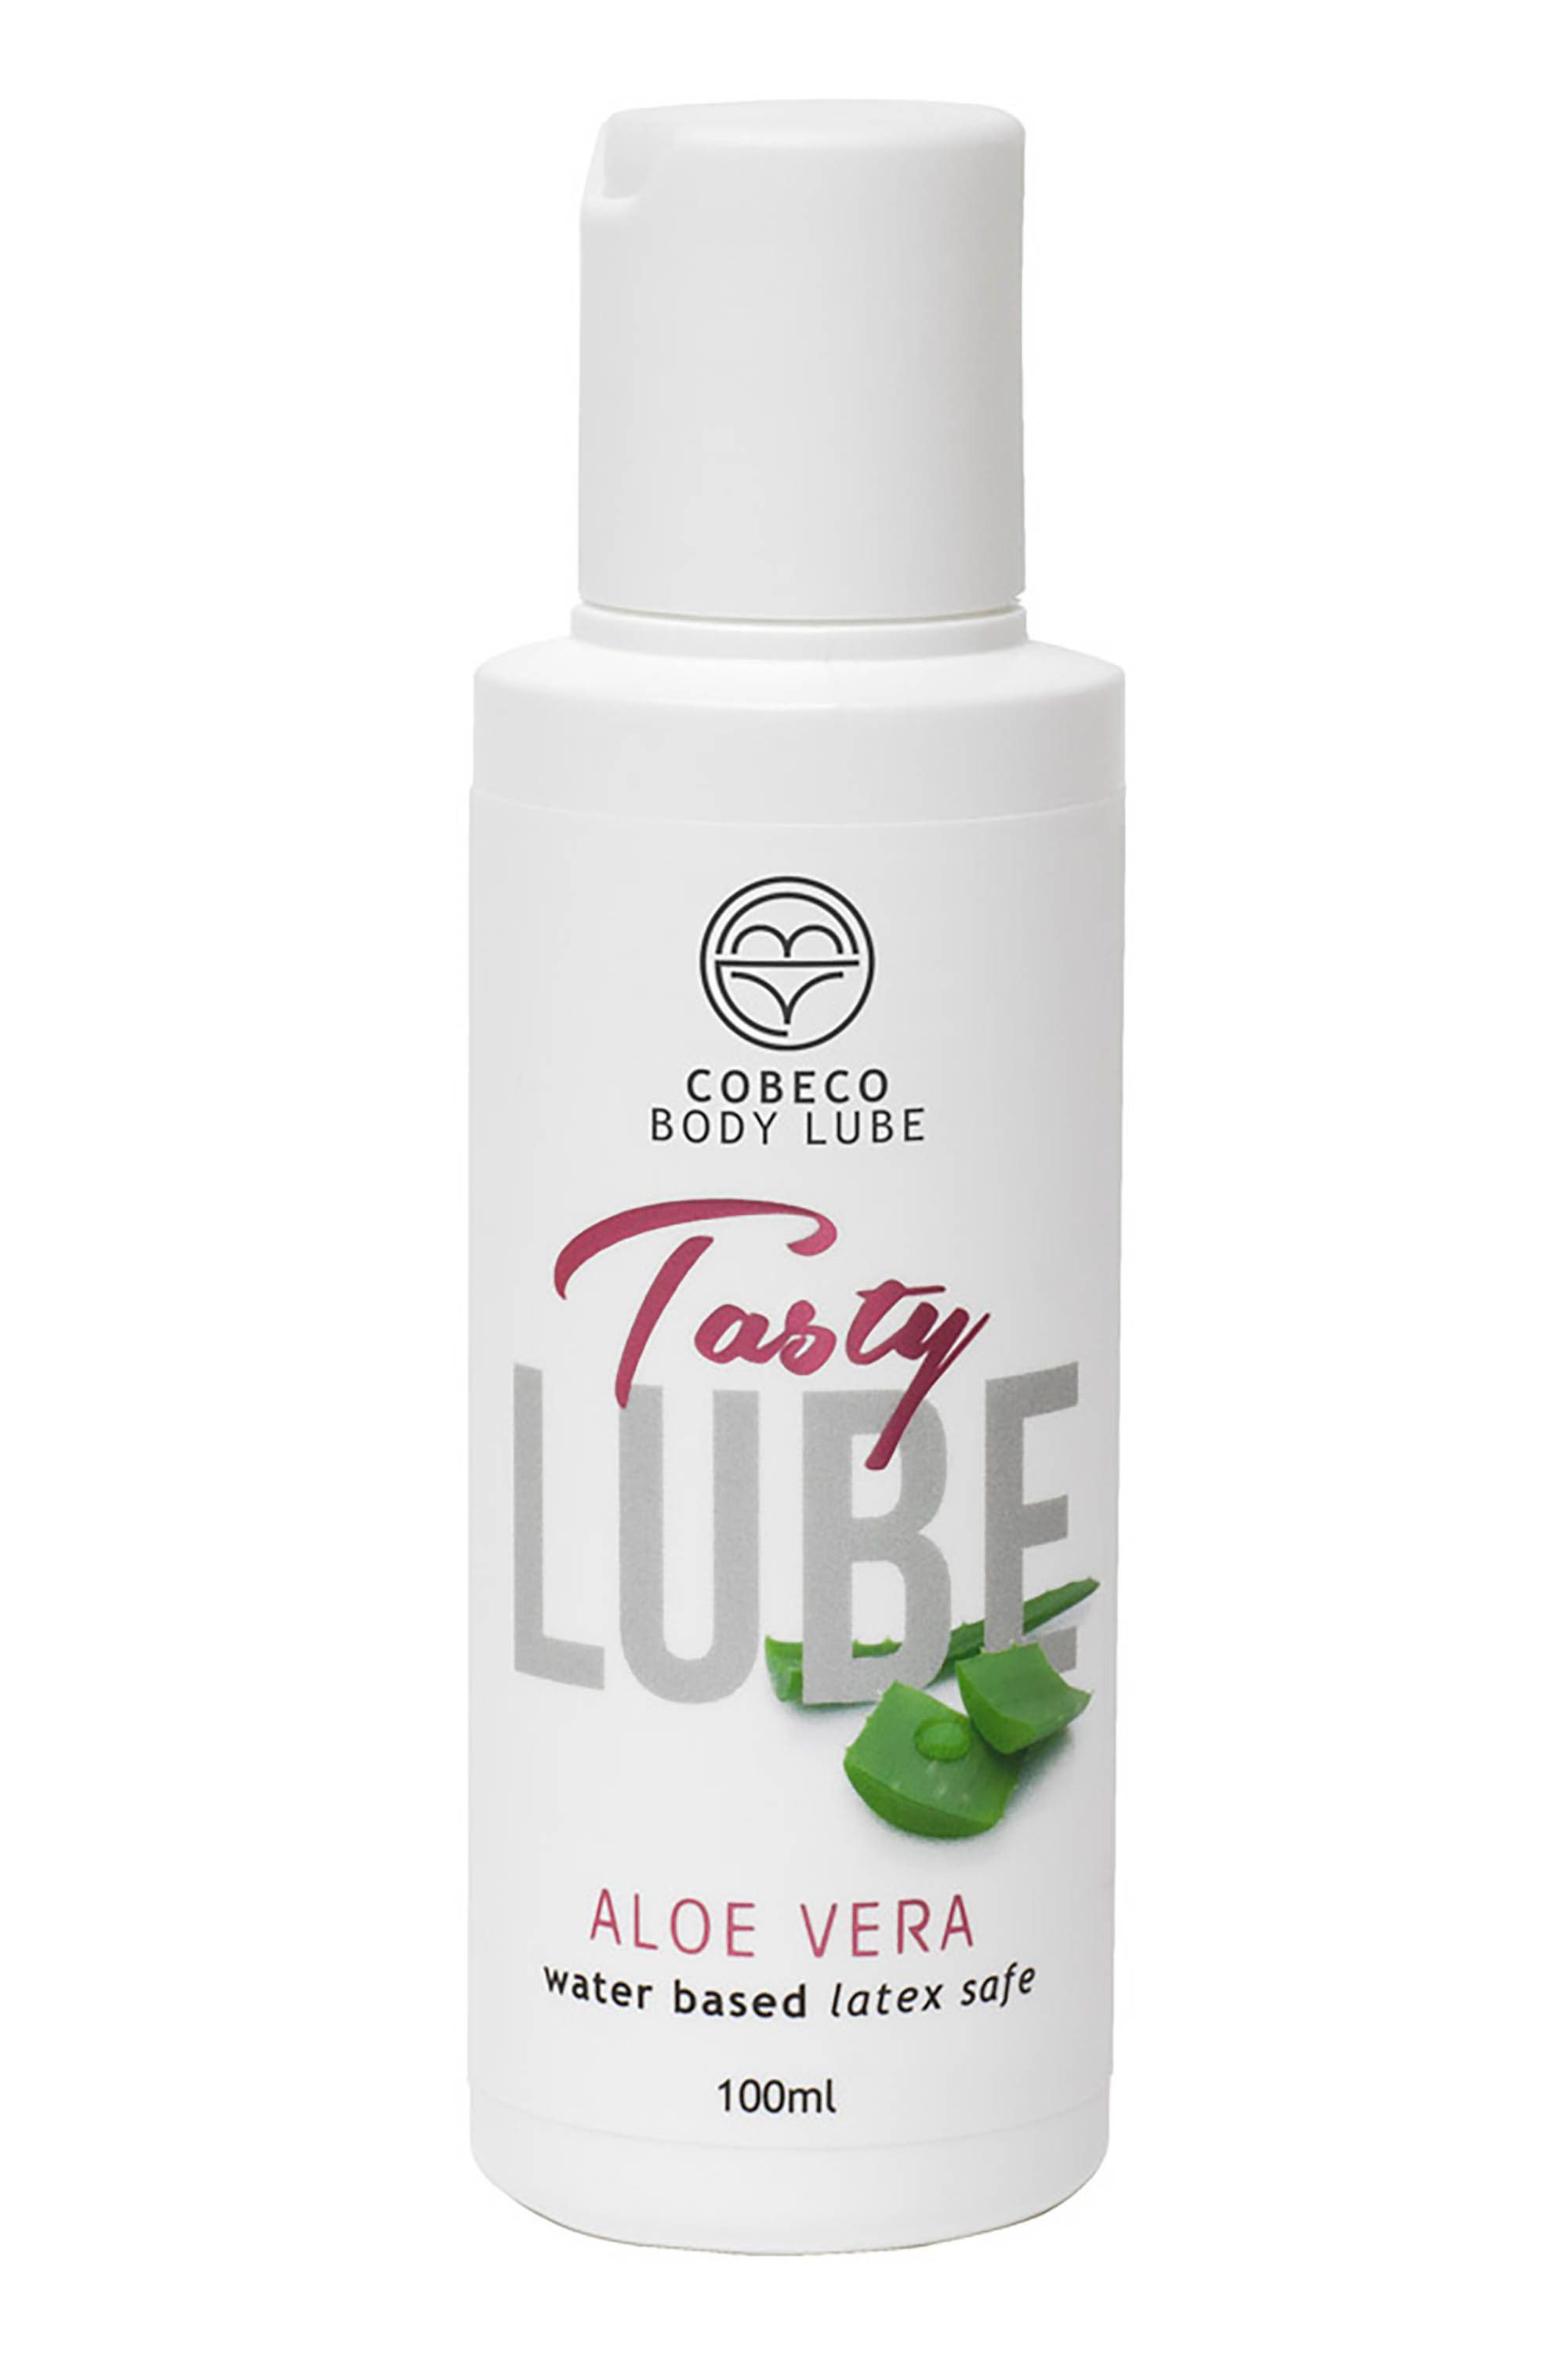 Cobeco Body Lube  Tasty - Glijmiddel op waterbasis - Aloe Vera - 100 ml